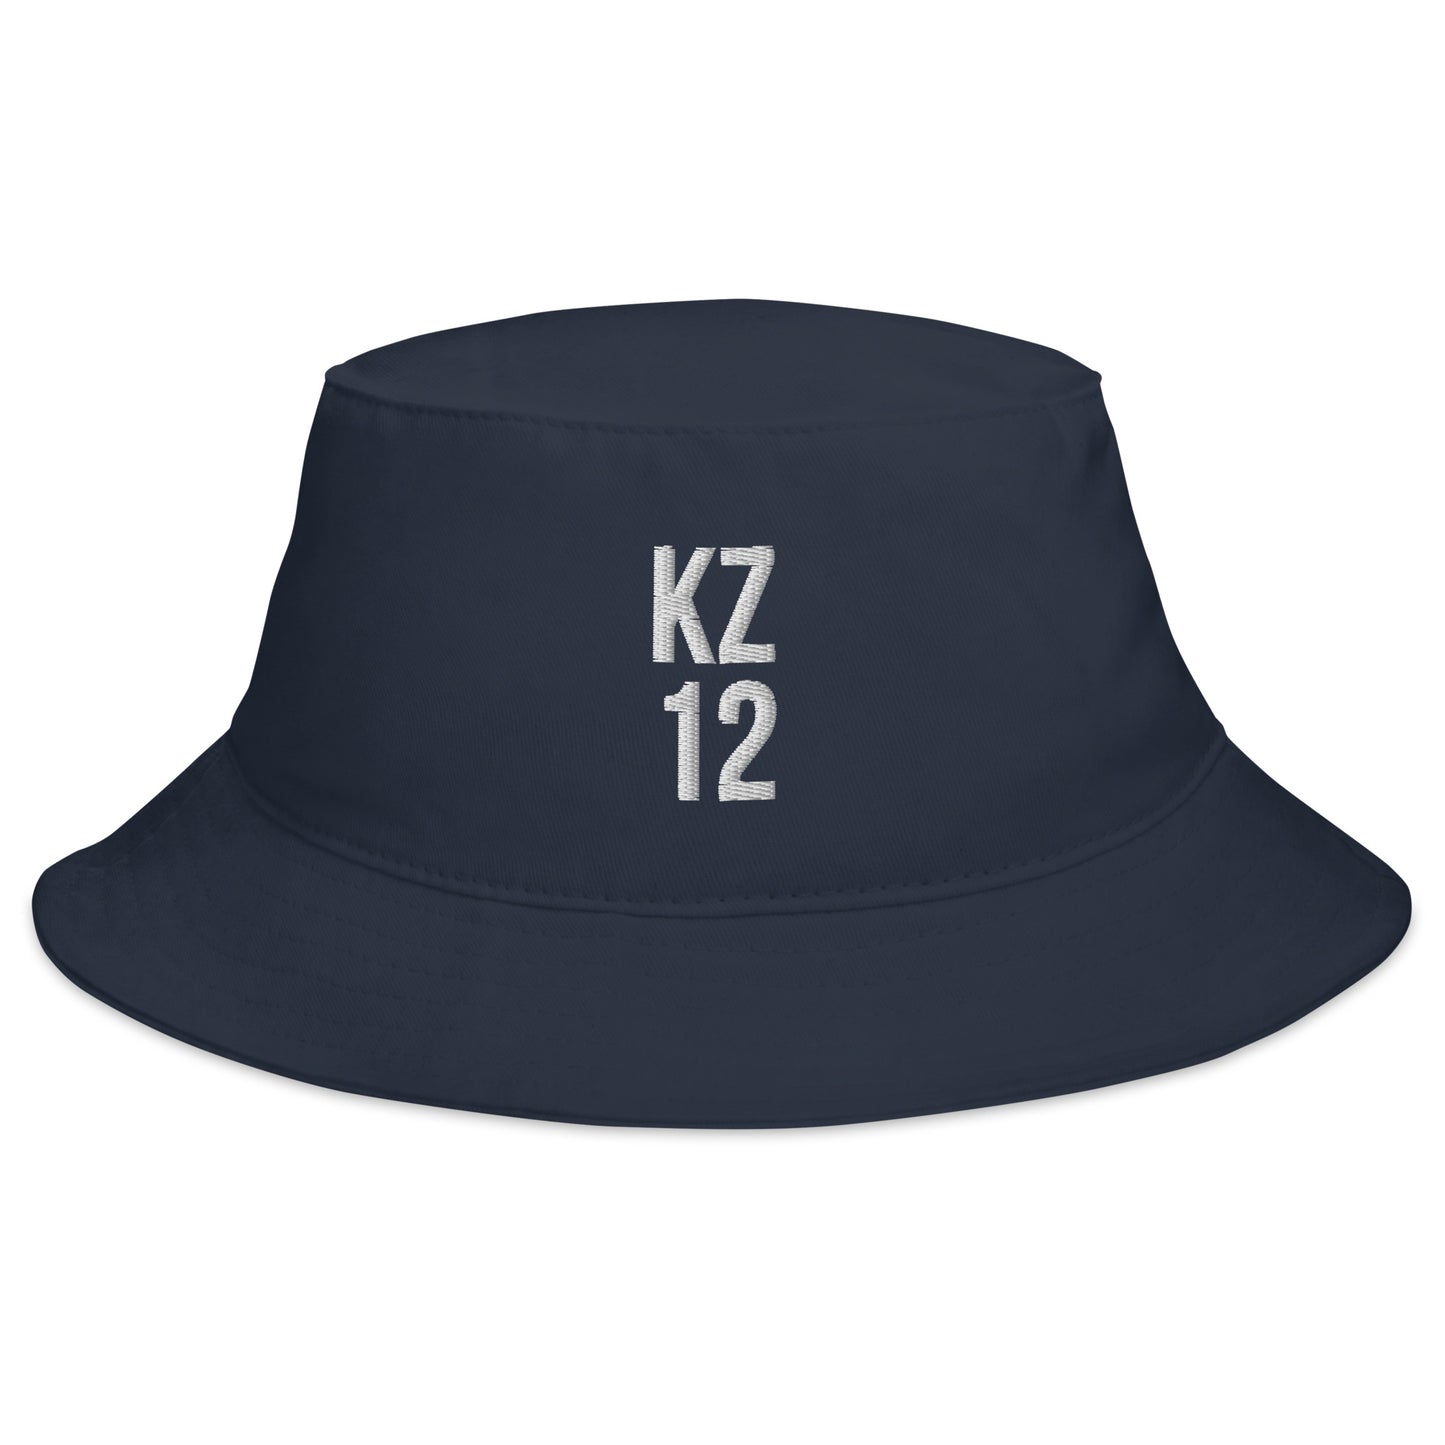 KZ 12 Bucket Hat